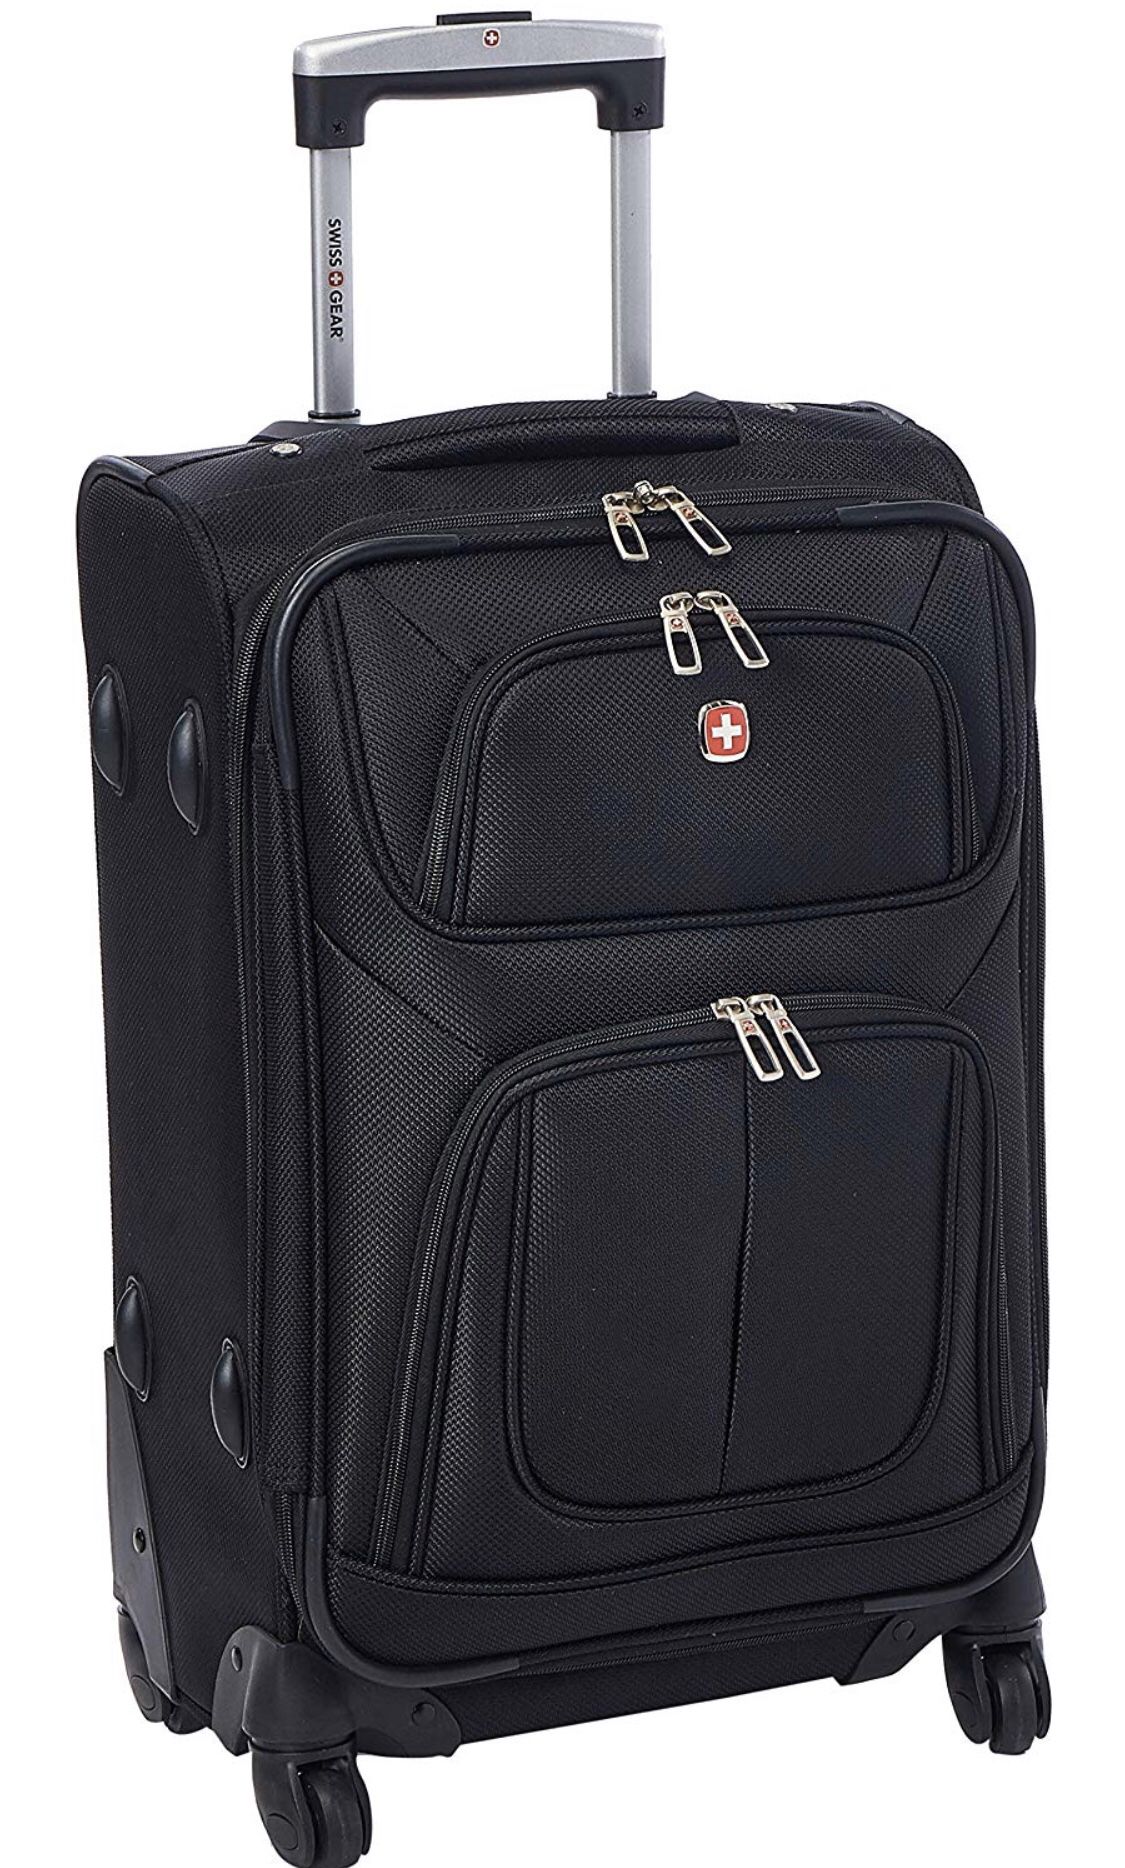 SwissGear 21” Sion Luggage (Brand New)